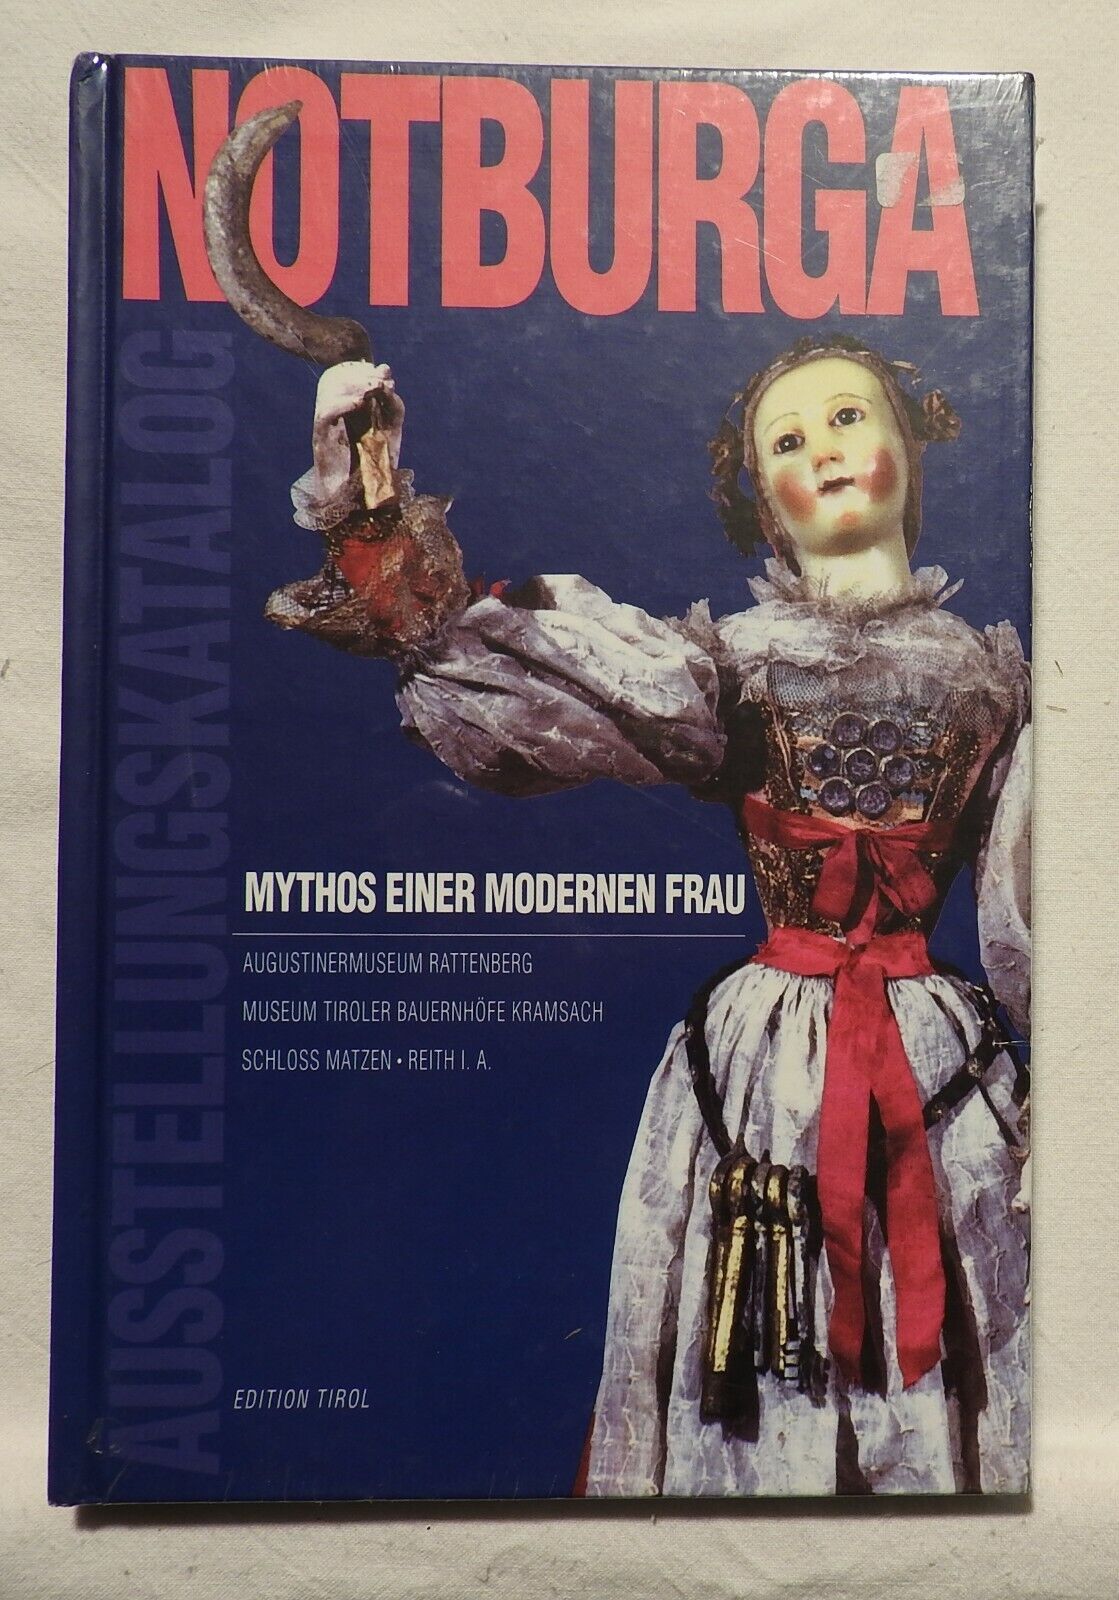 Notburga Mythos einer modernen Frau - Augustinermuseum Rattenberg - NEU! (M 225) - Reith